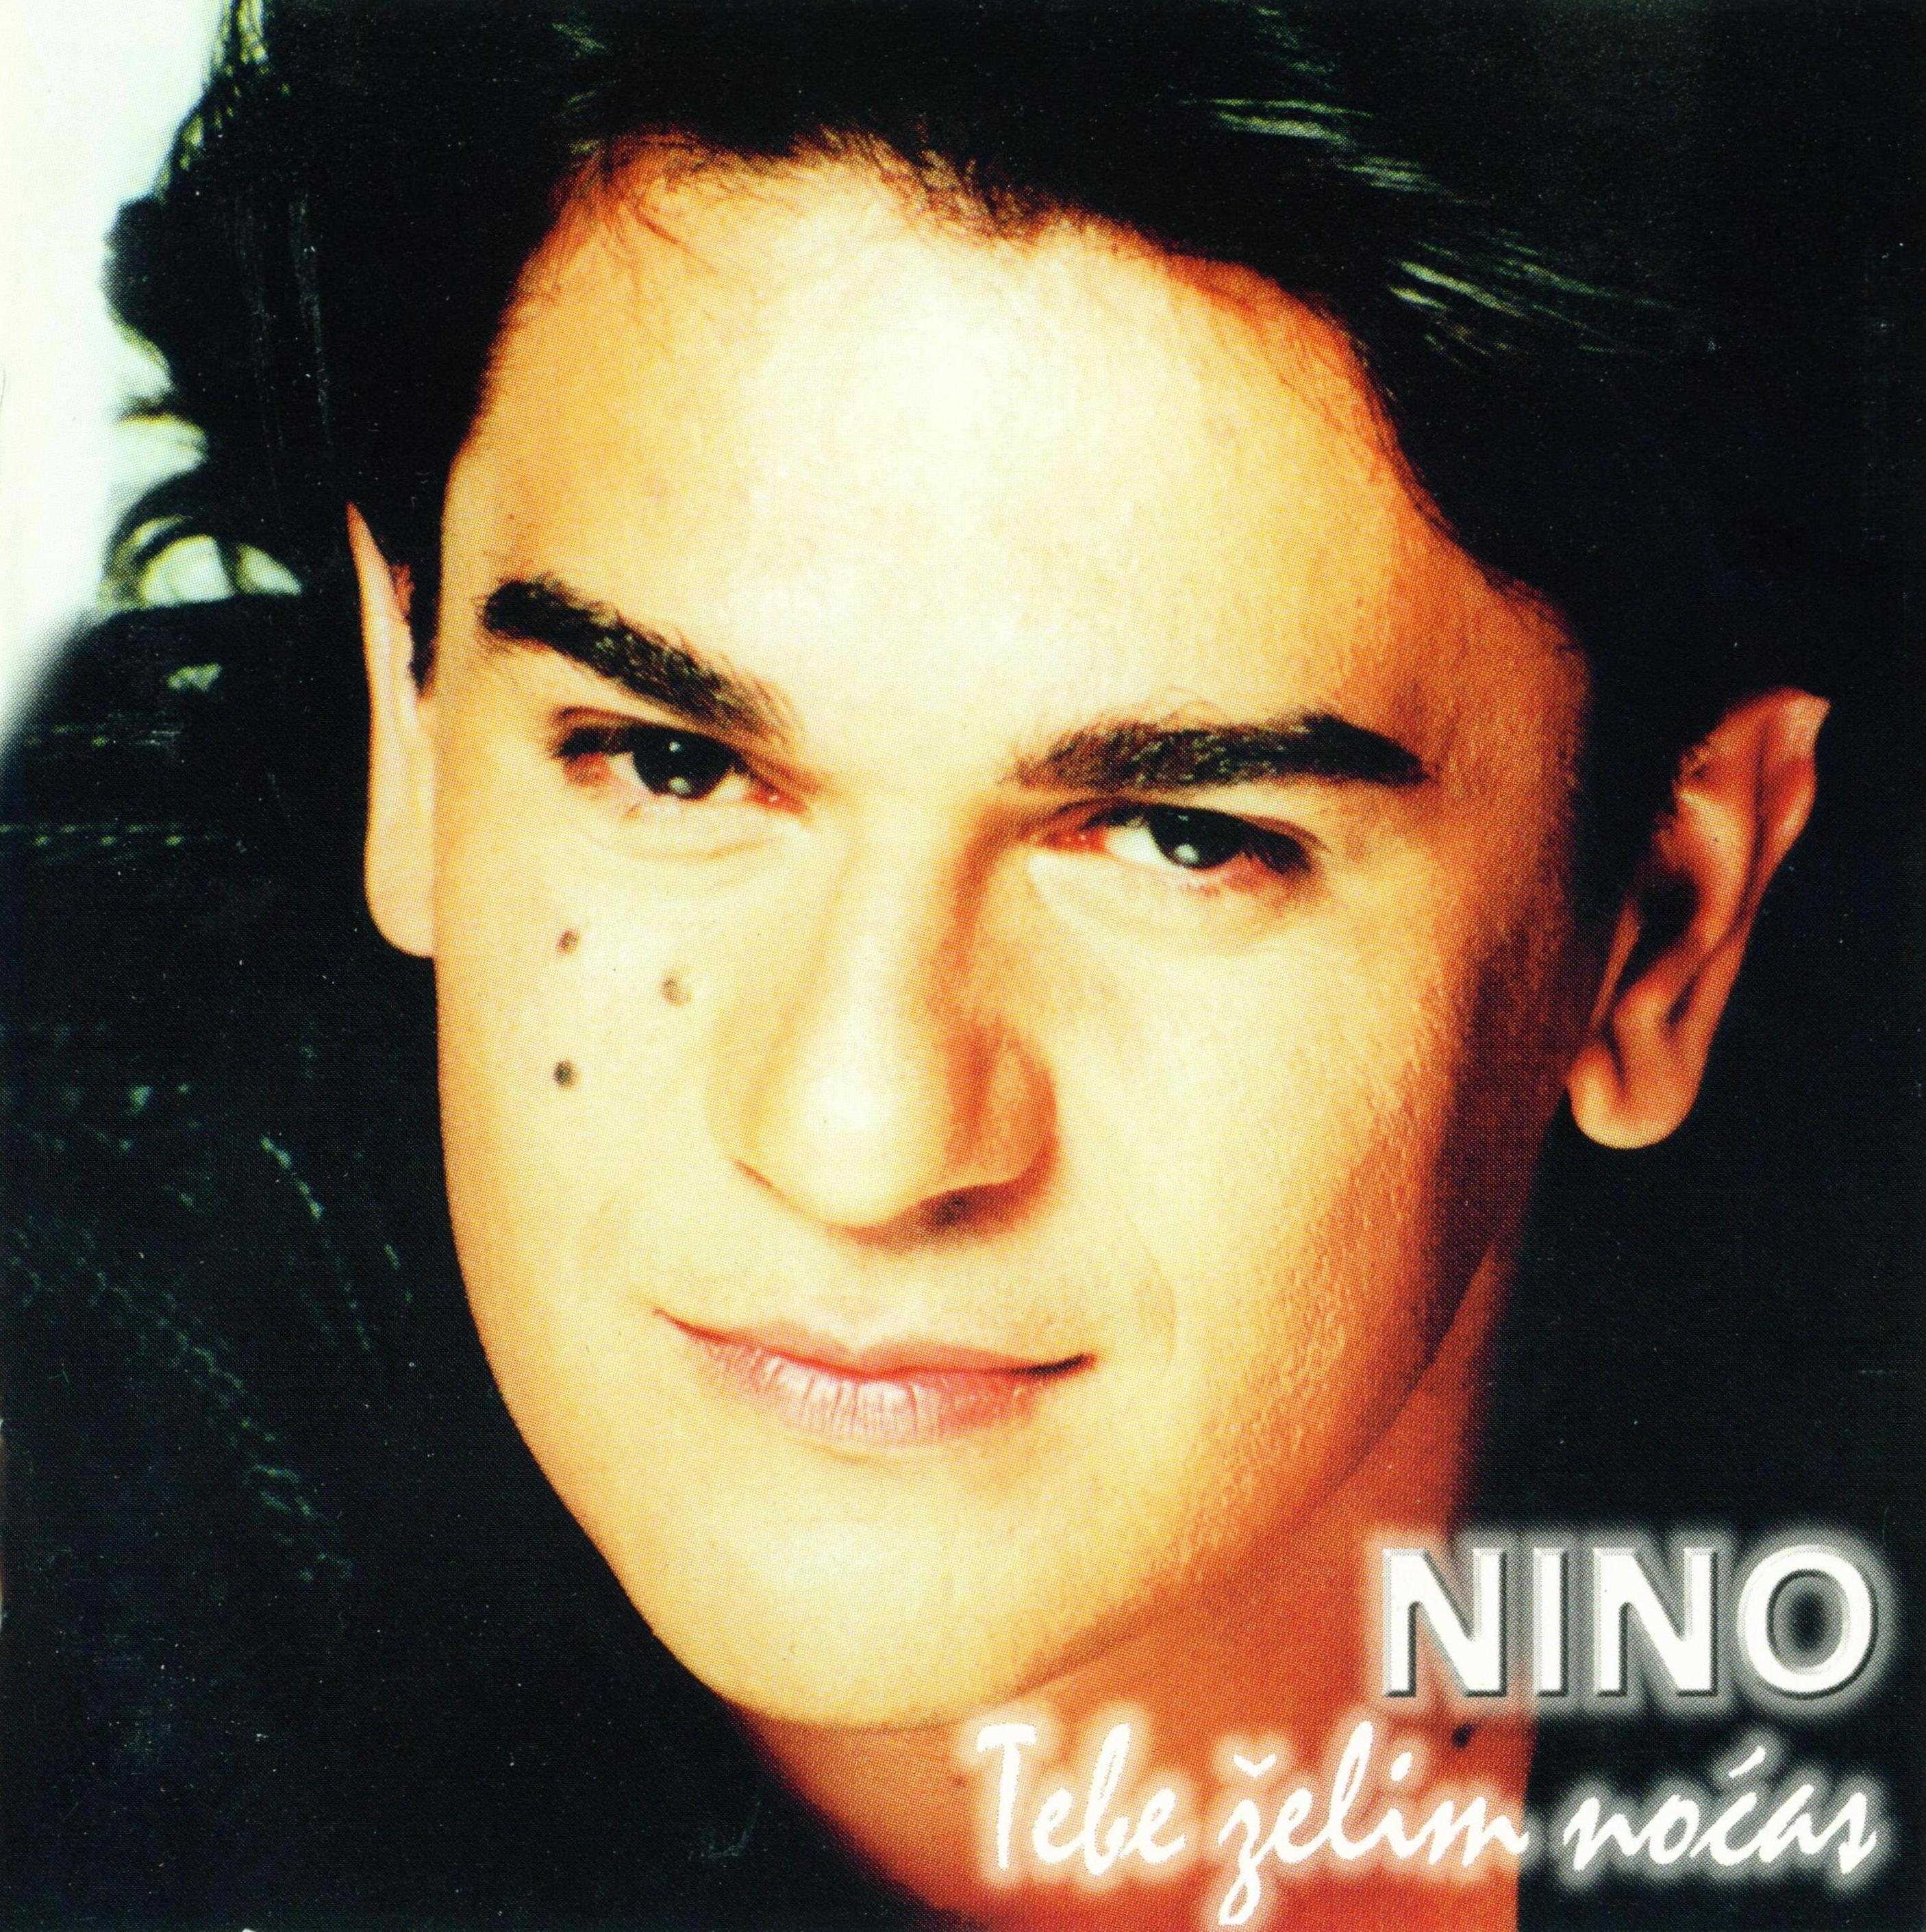 Nino 1996 Tebe elim Noas Front 1